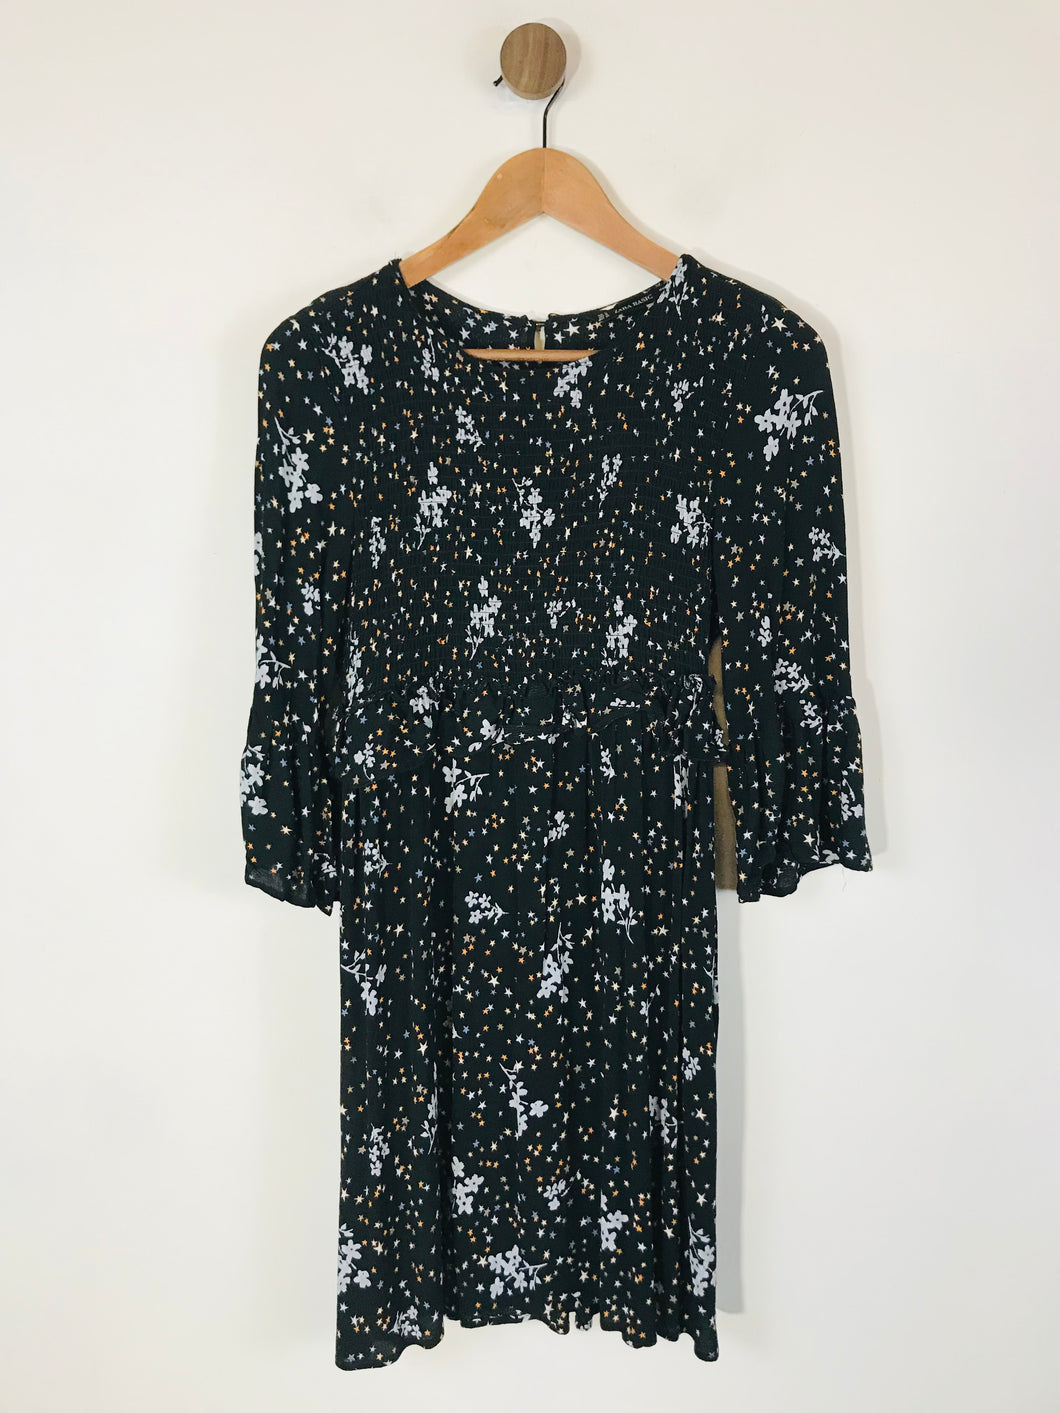 Zara Women's Floral Ruffle A-Line Dress | M UK10-12 | Black